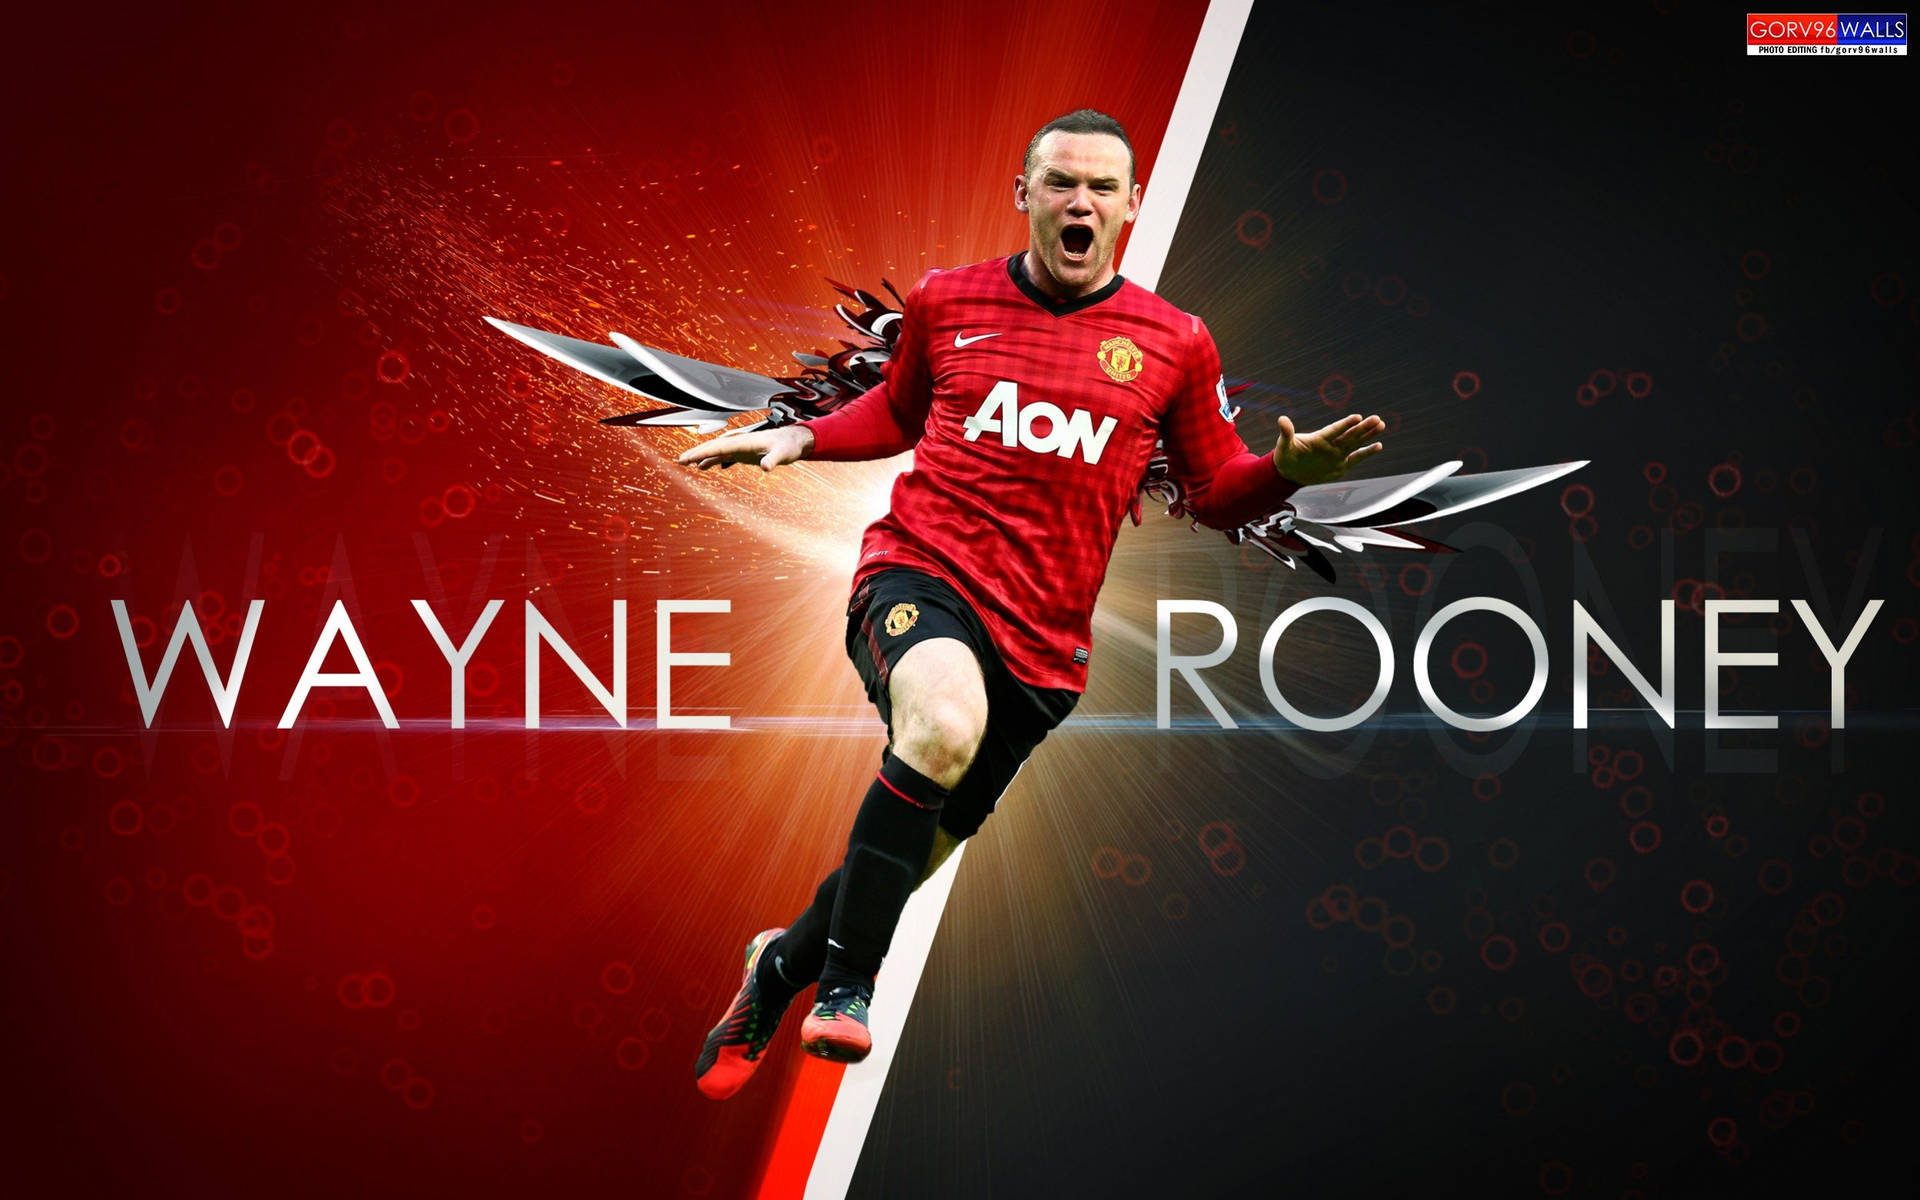 Wayne Rooney Digital Art